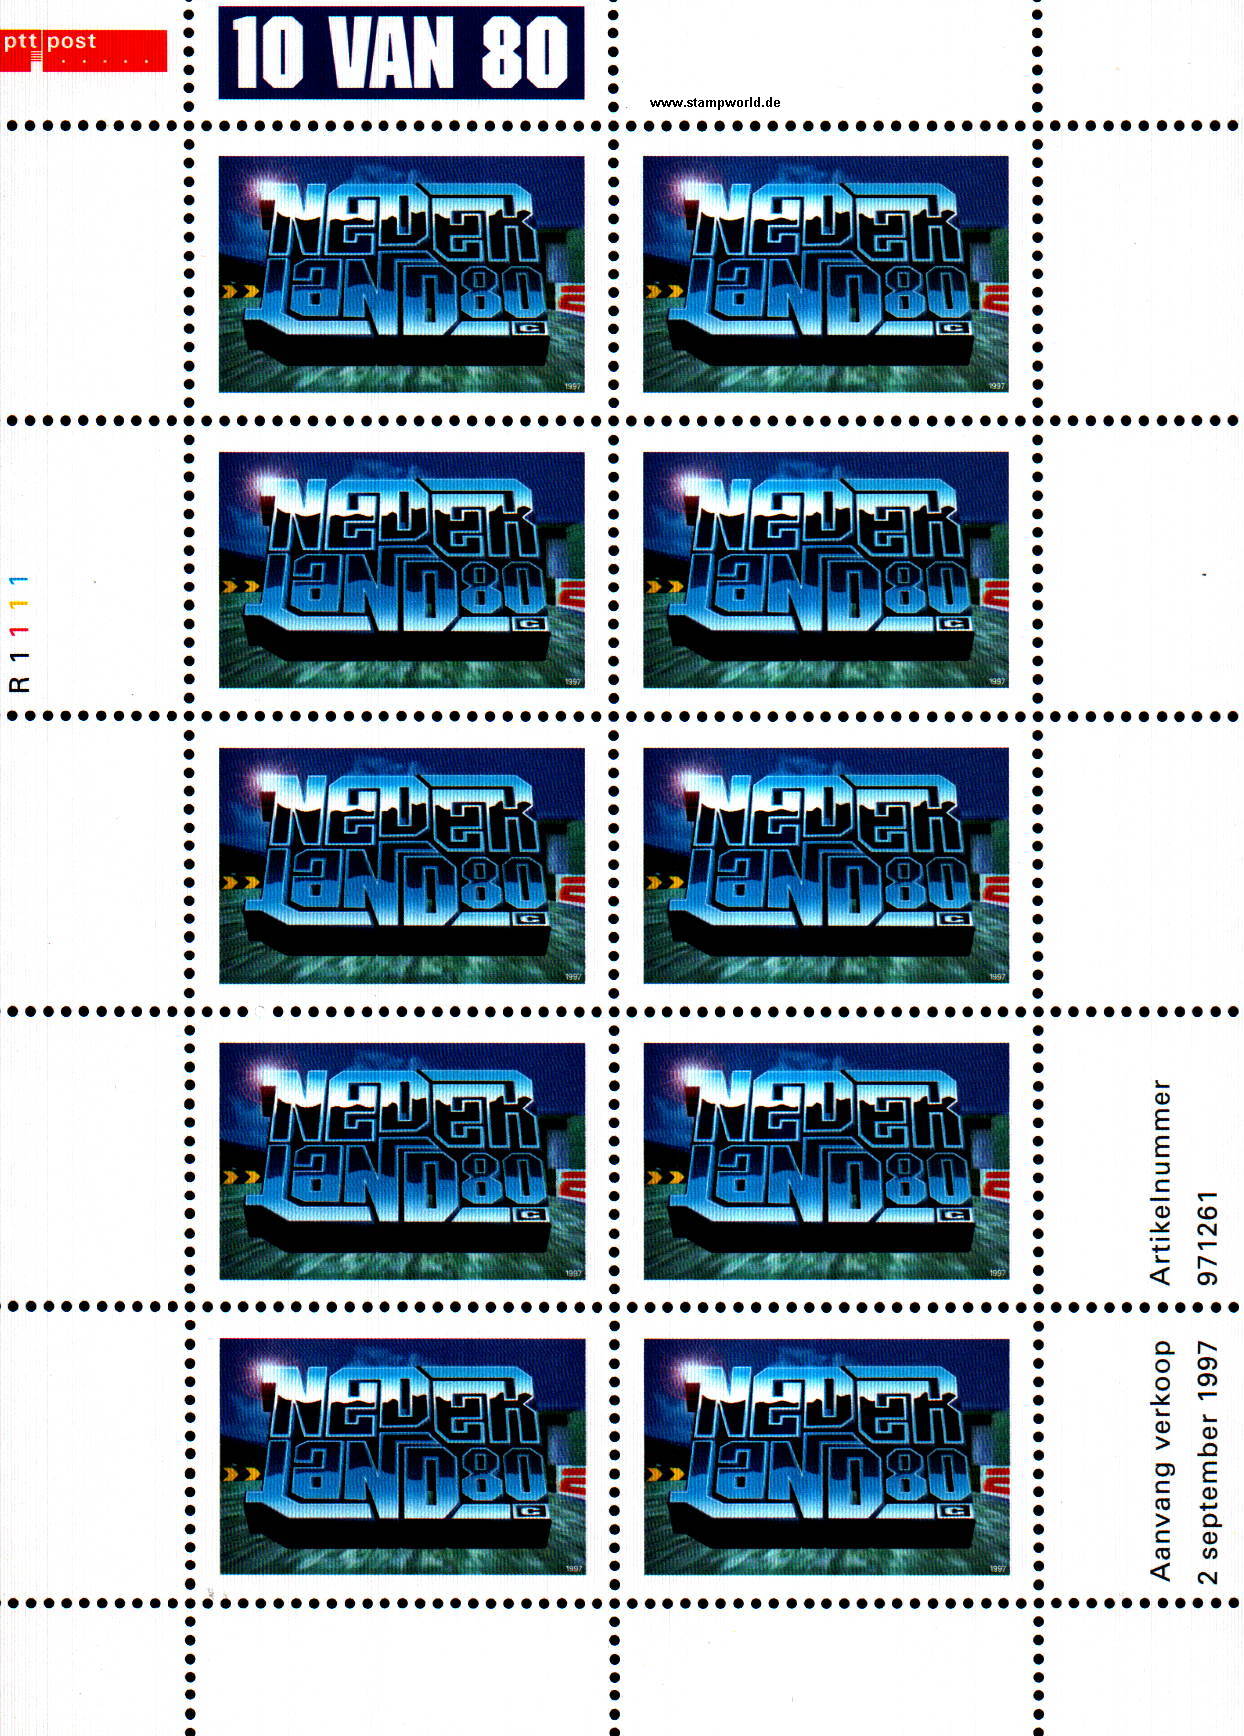 Briefmarken/Stamps Jugendtrends/3-D-Computergrafik